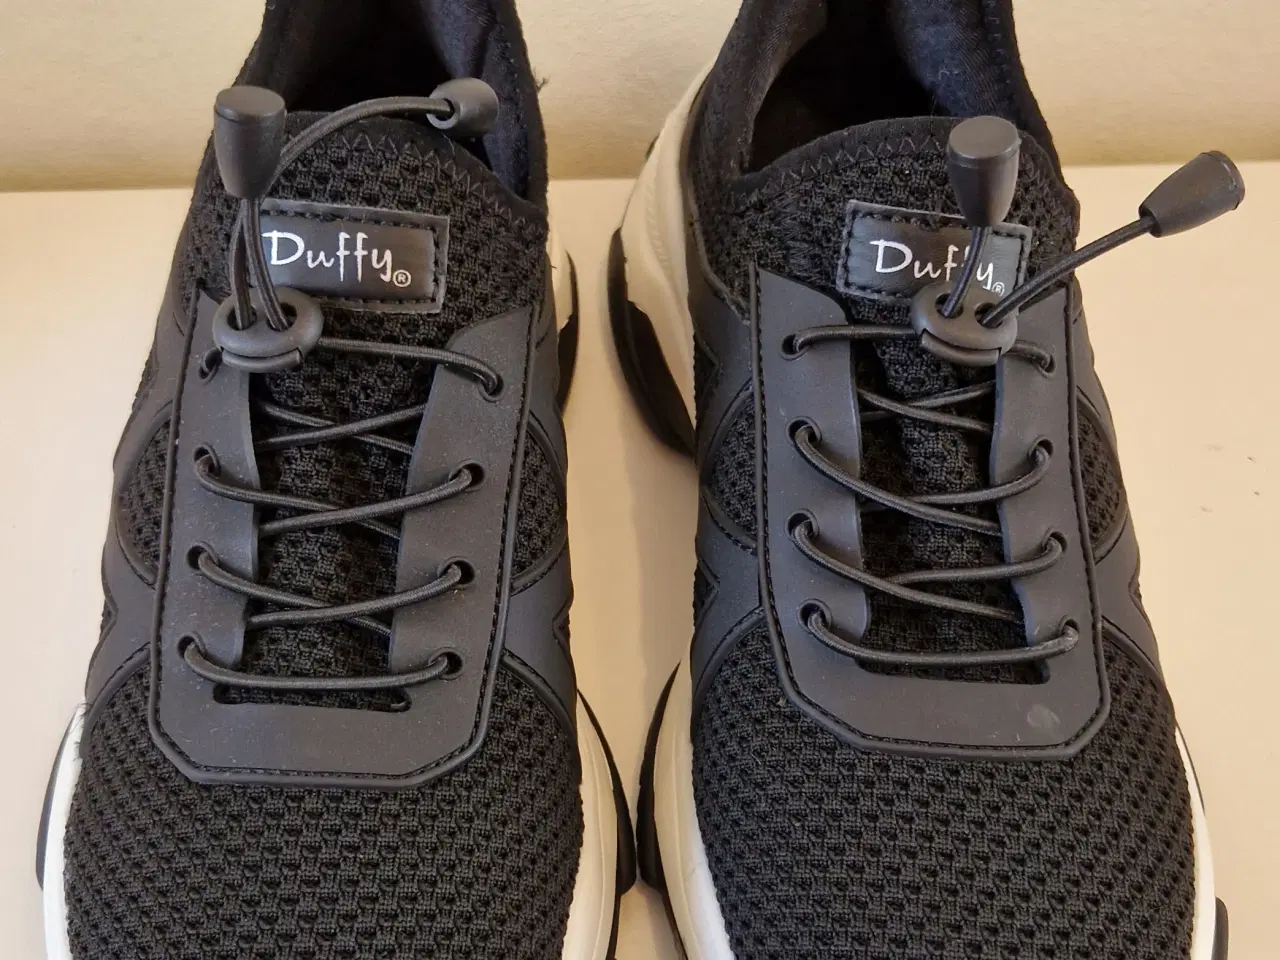 Billede 1 - Helt nye sorte Duffy sko